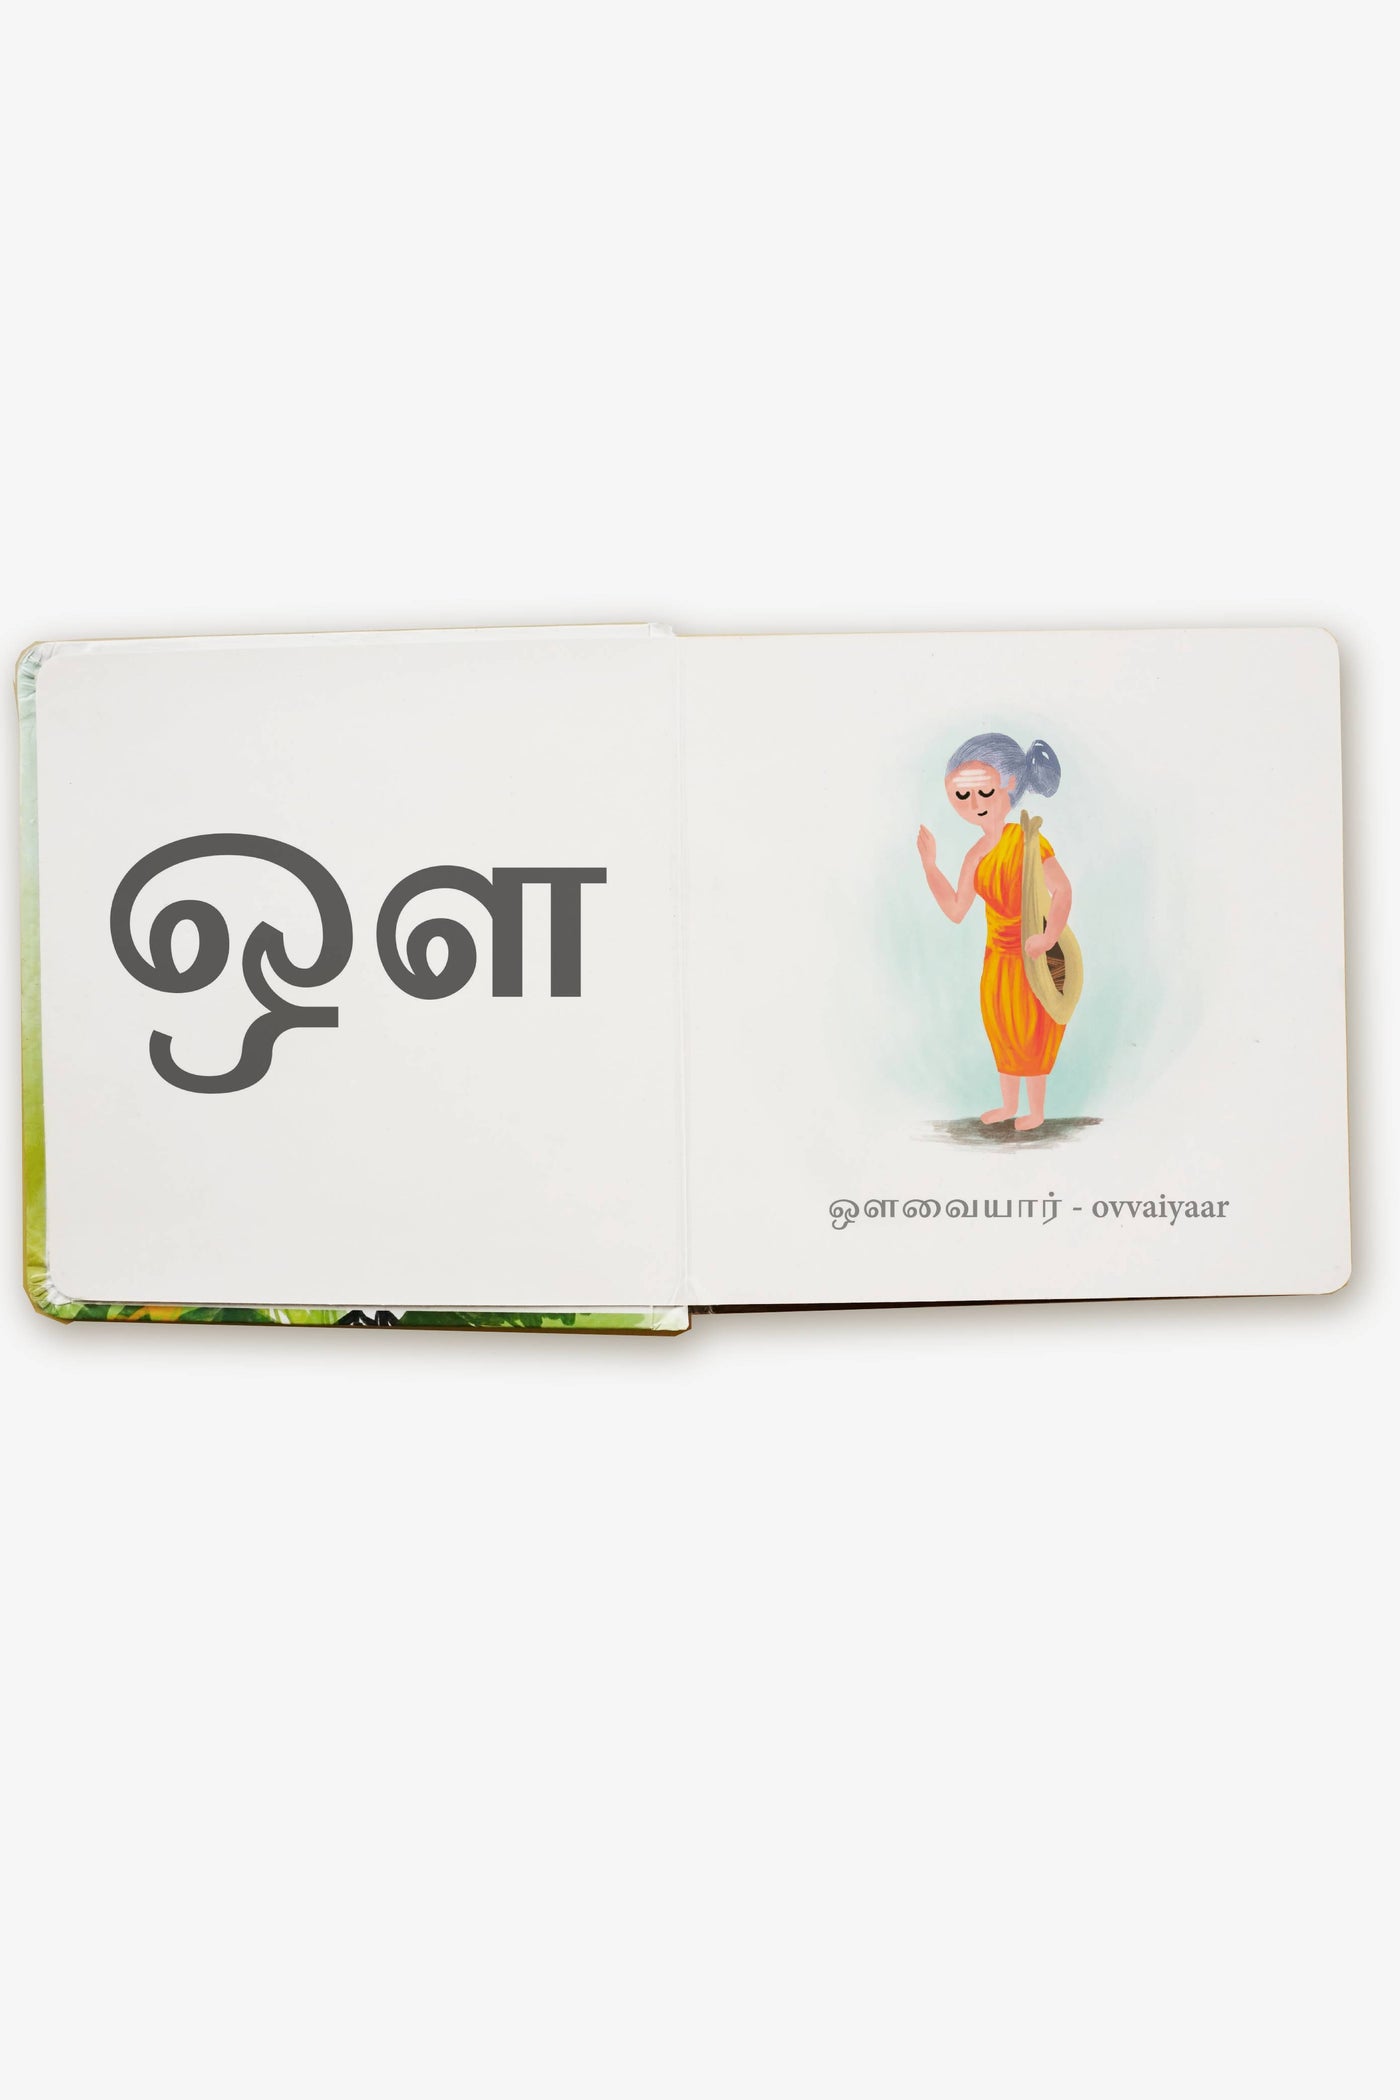 En Mudhal Puthakam - Tamil book